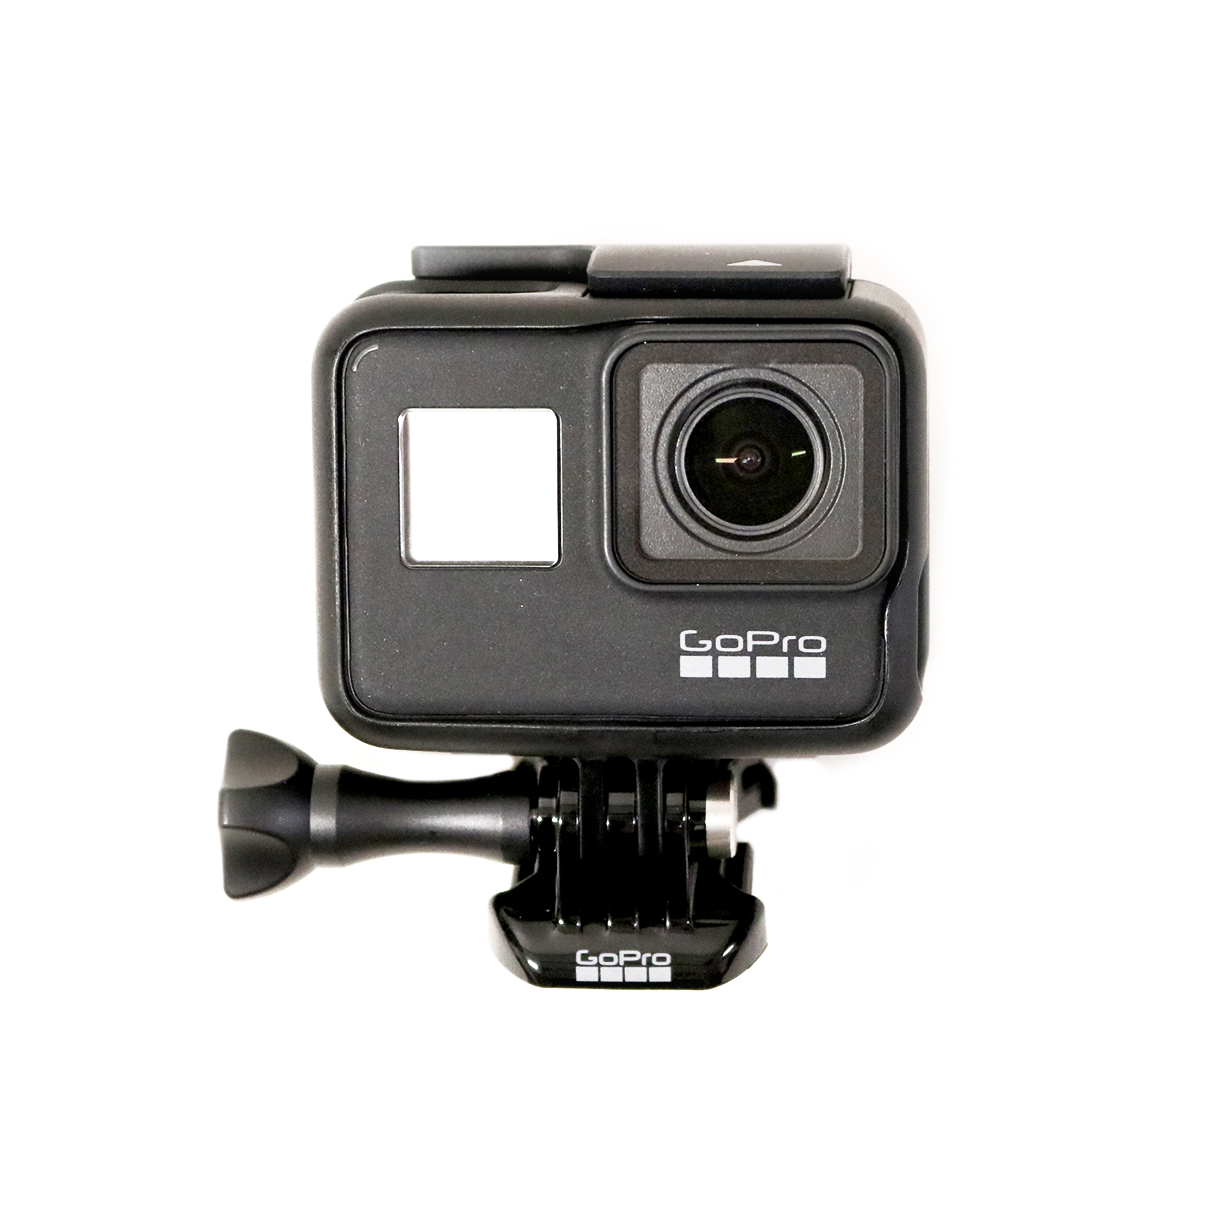 GoPro Hero 7 Black camera